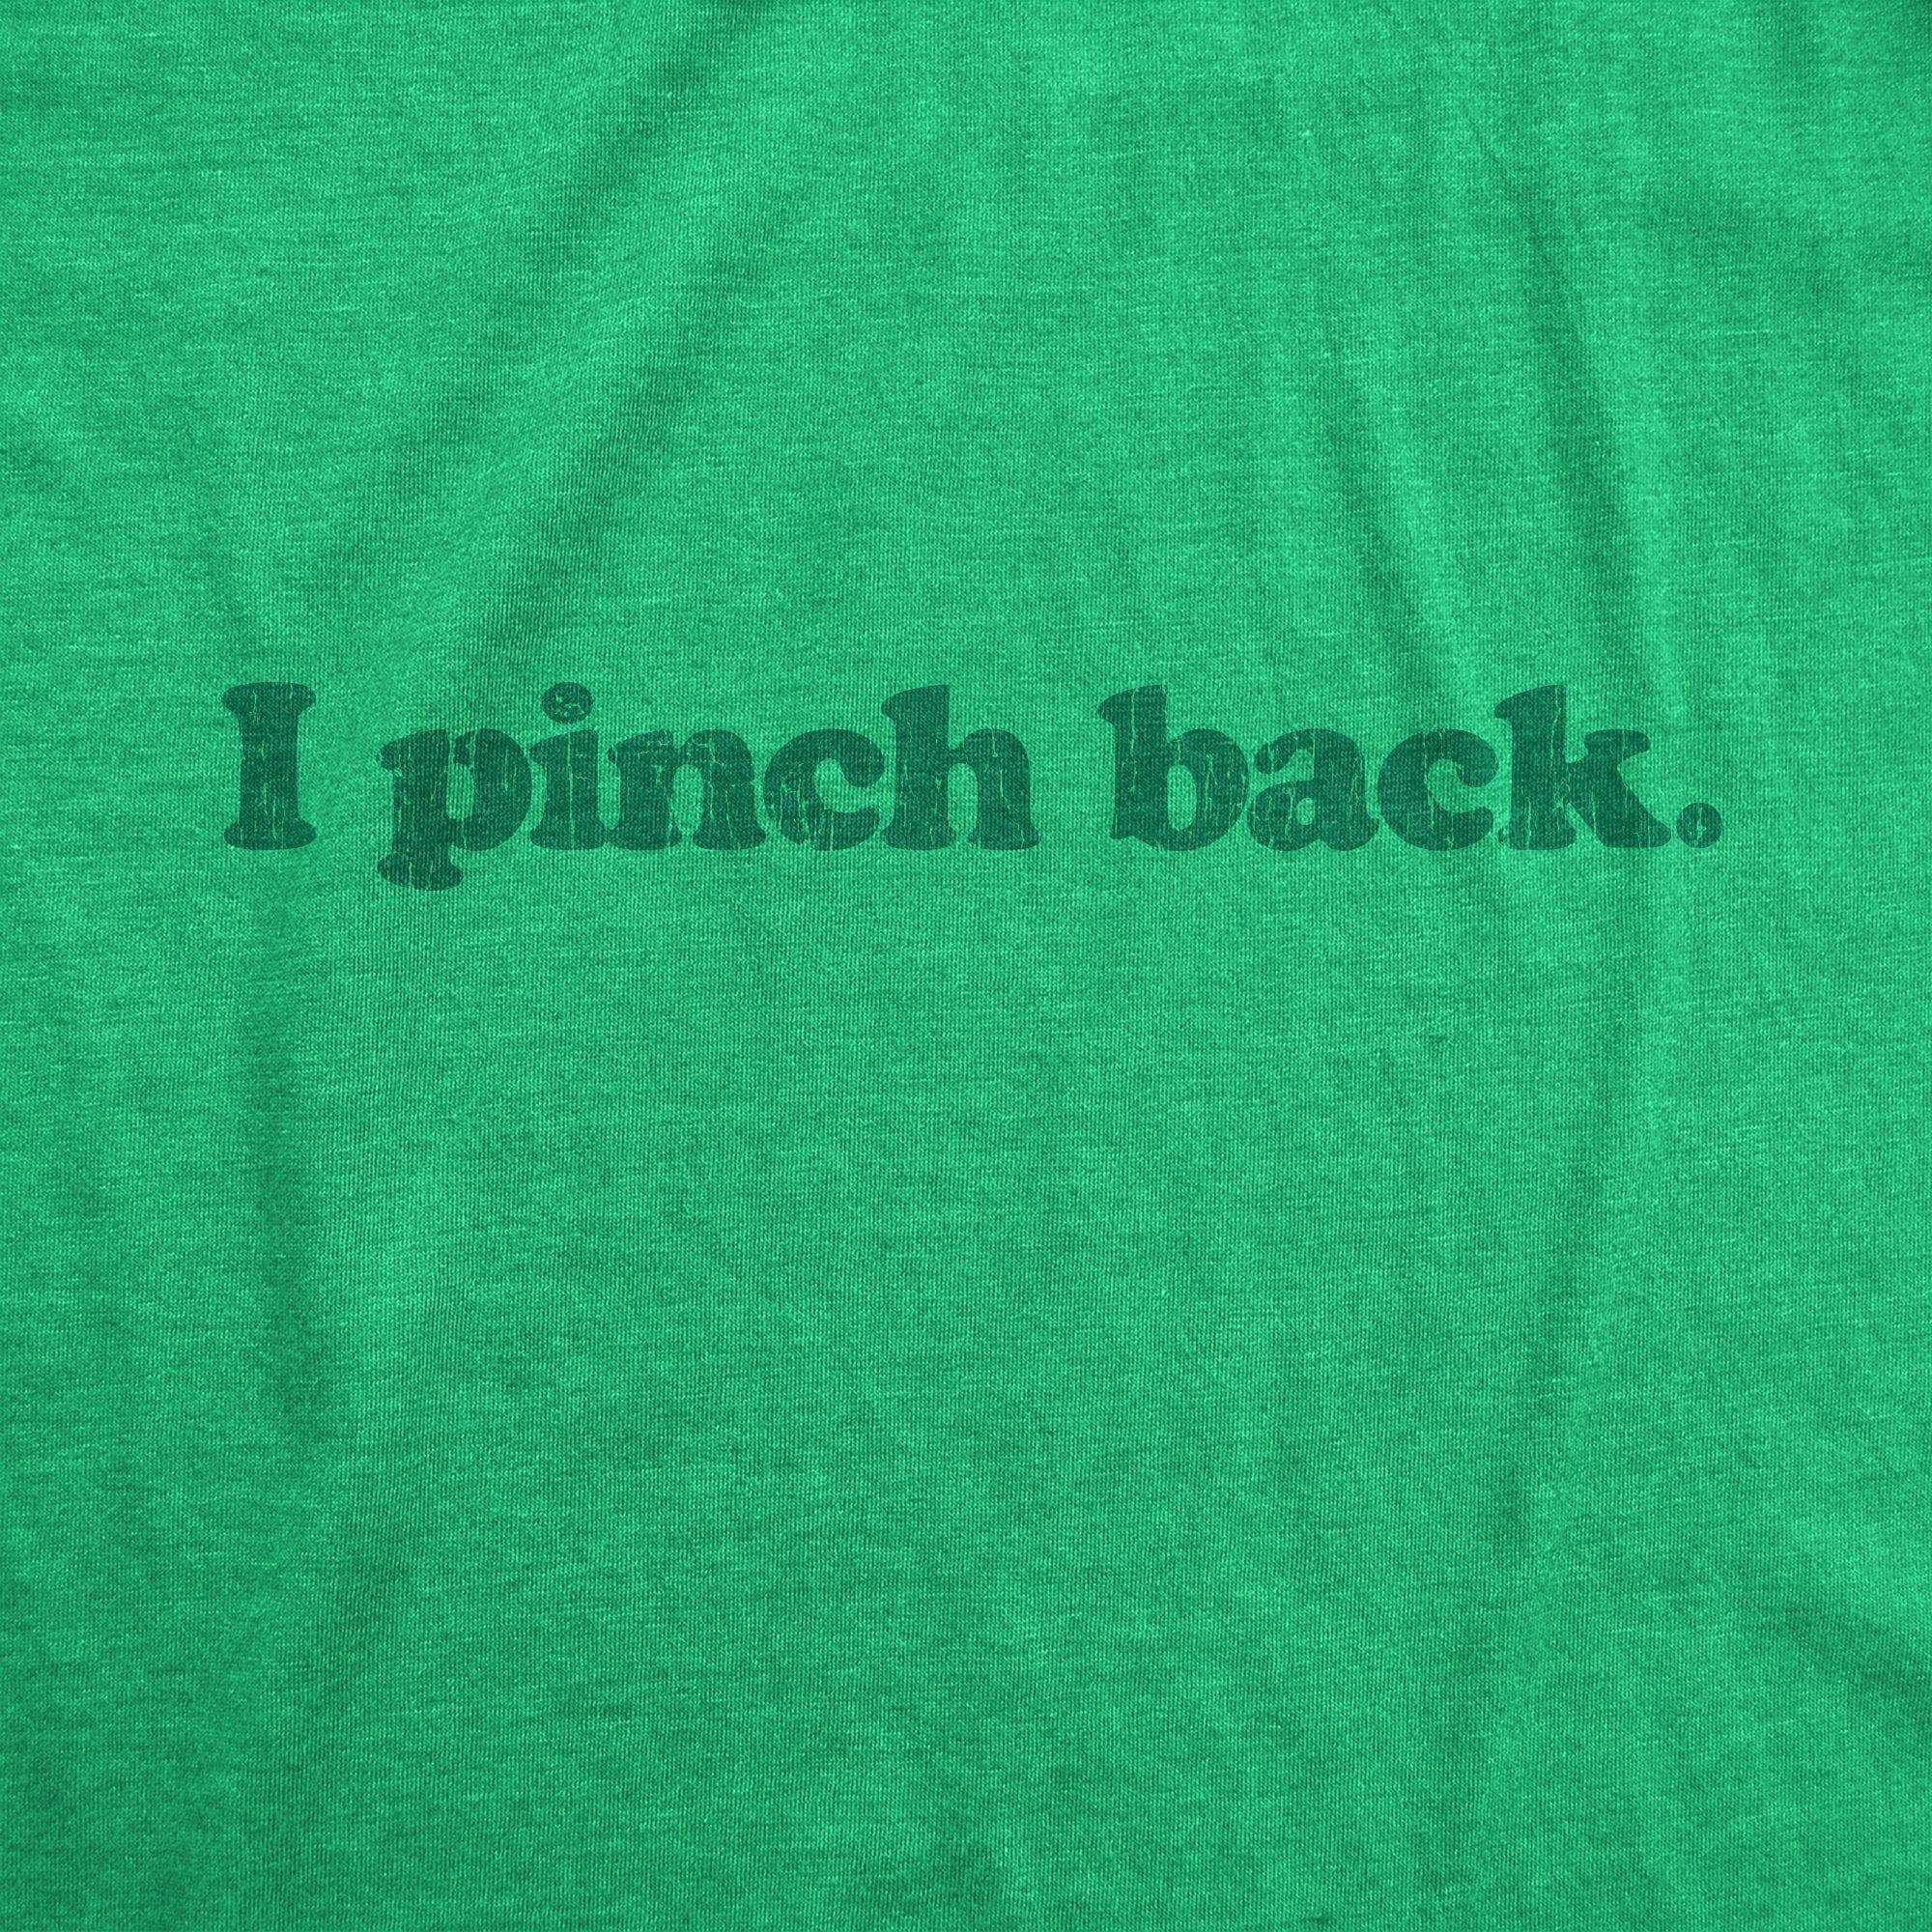 I Pinch Back Men's Tshirt - Crazy Dog T-Shirts